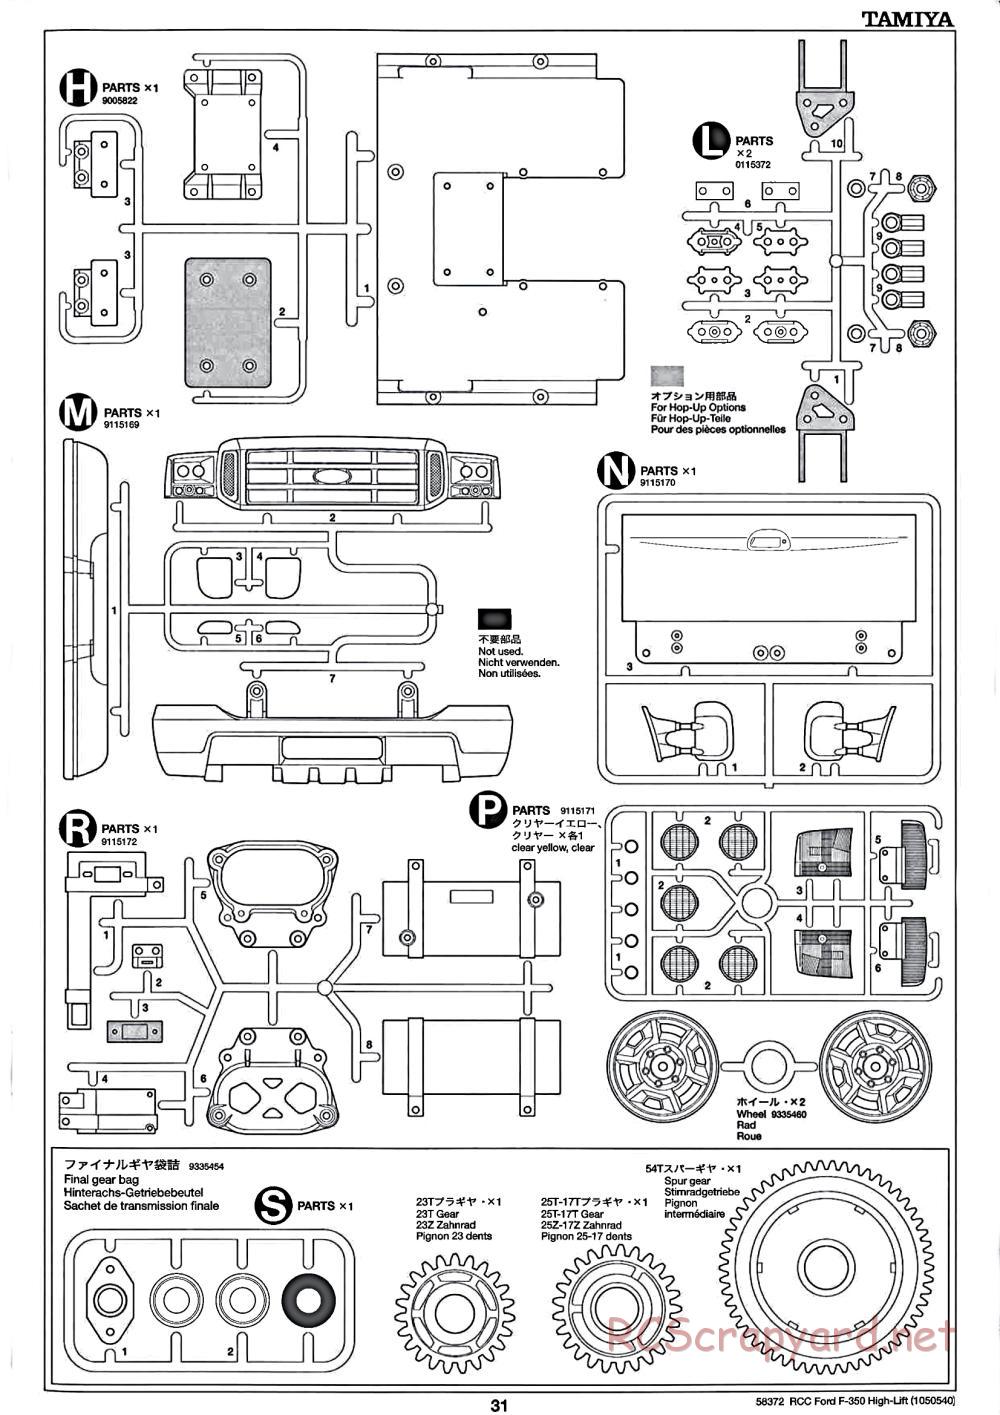 Tamiya - Ford F350 High-Lift Chassis - Manual - Page 31